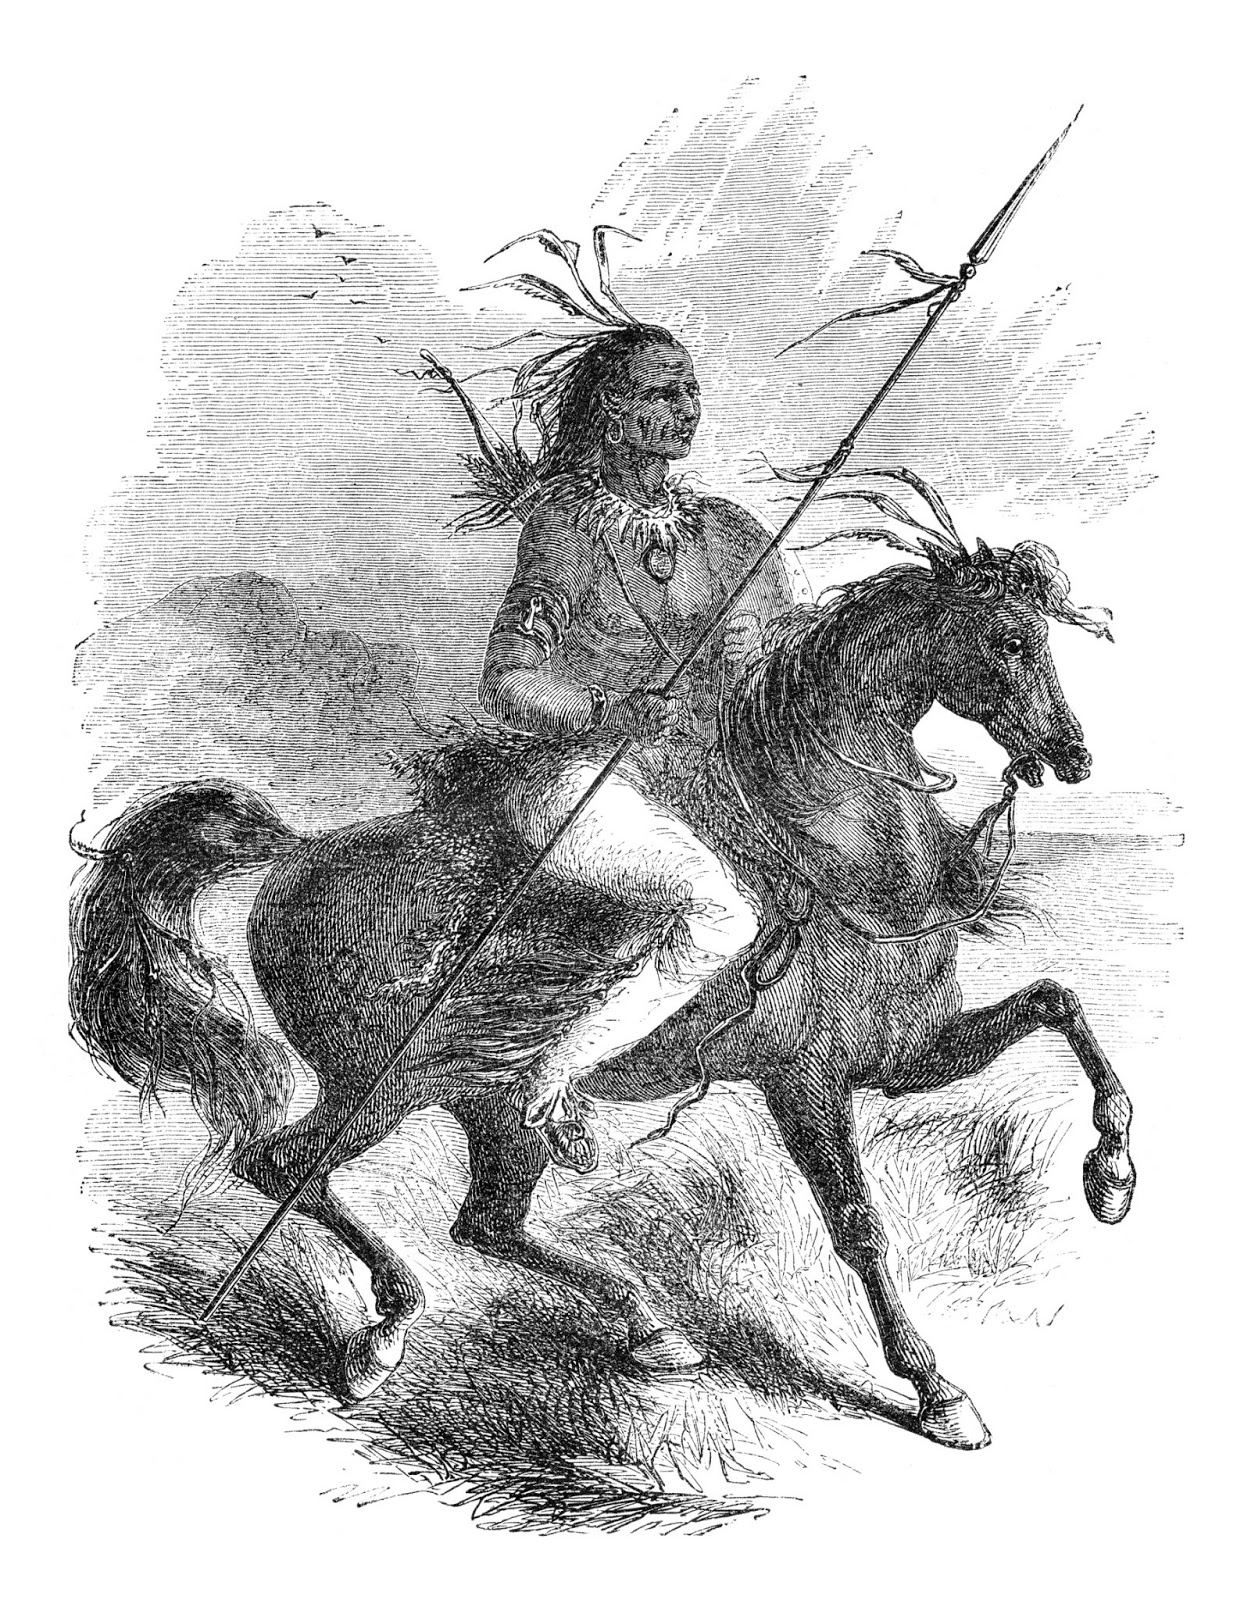 [Image: Comanche+warrior+on+horseback.jpg]